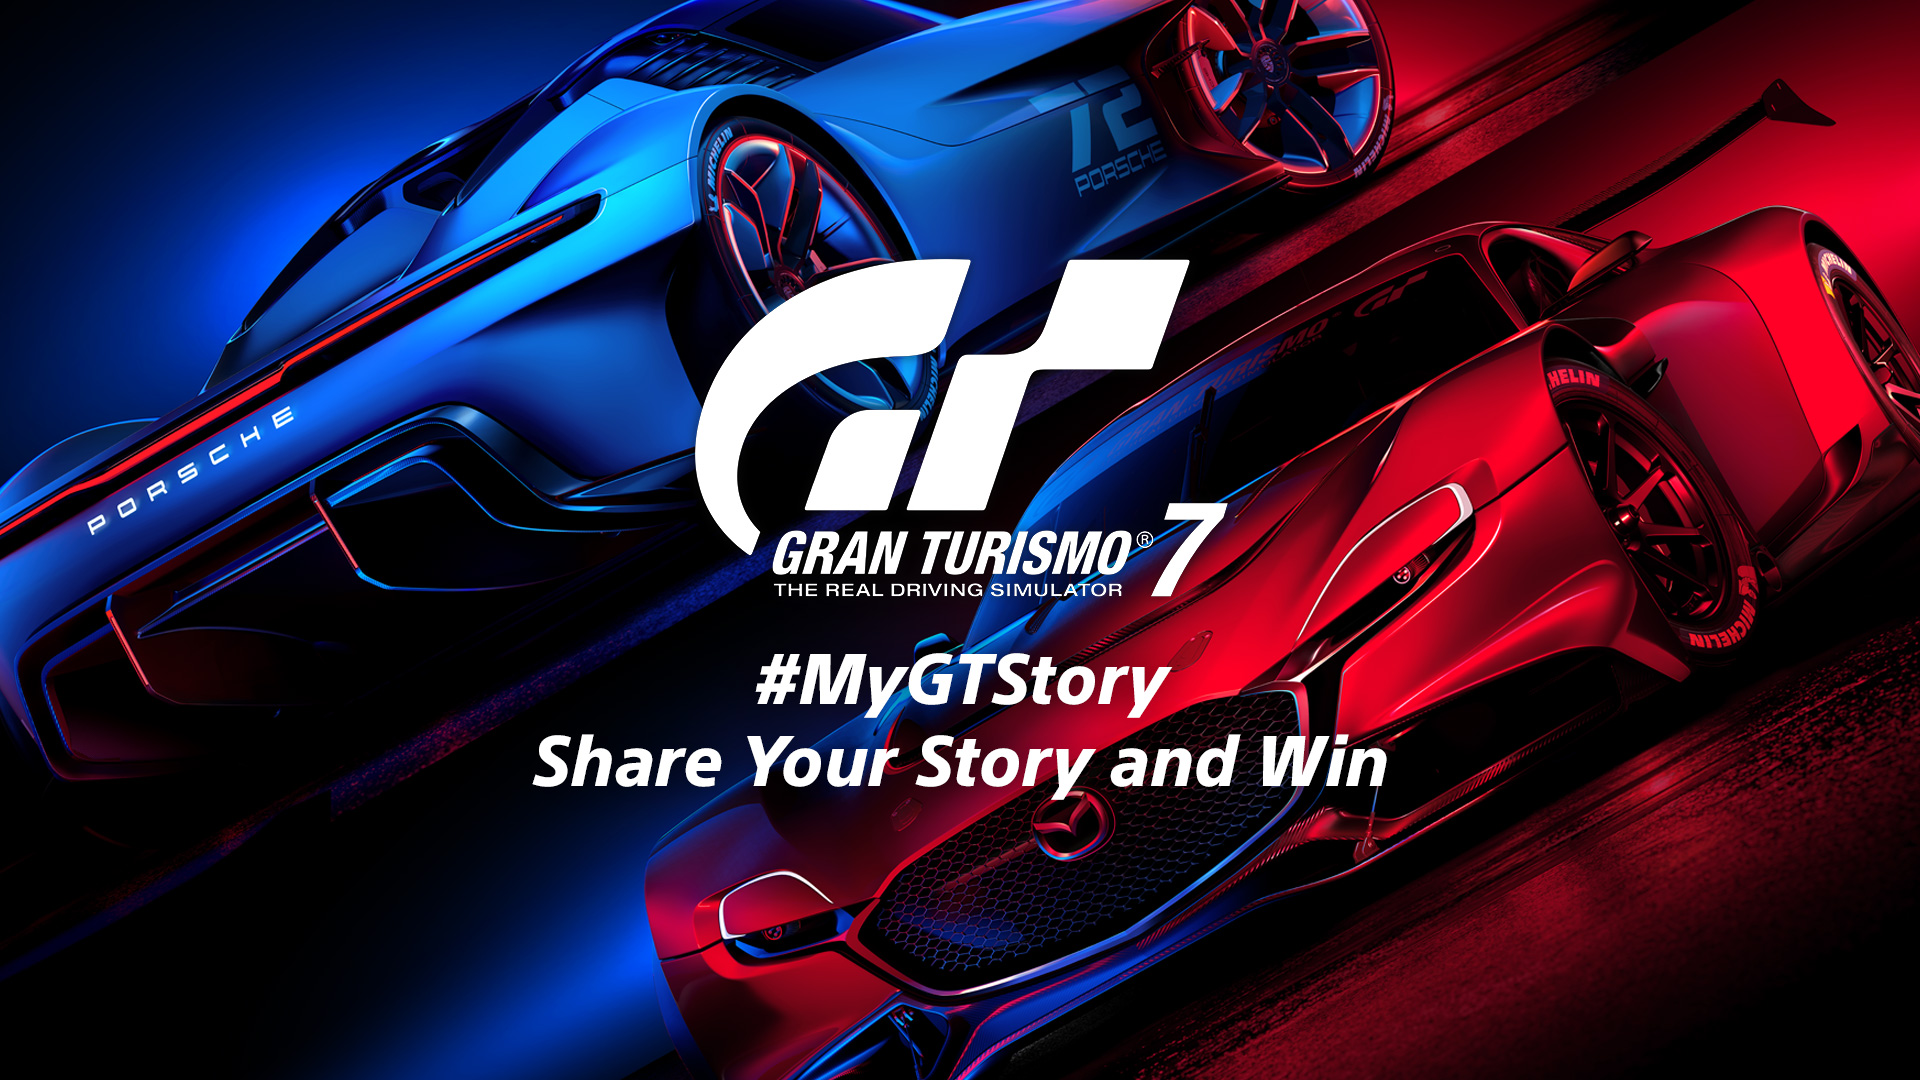 PlayStation จัดแคมเปญ “Gran Turismo 7” MyGTStory ร่วมแบ่งปันเรื่องราวของคุณและลุ้นรับรางวัล  “Autographed Deluxe Gift Set” ตั้งแต่วันนี้เป็นต้นไป 